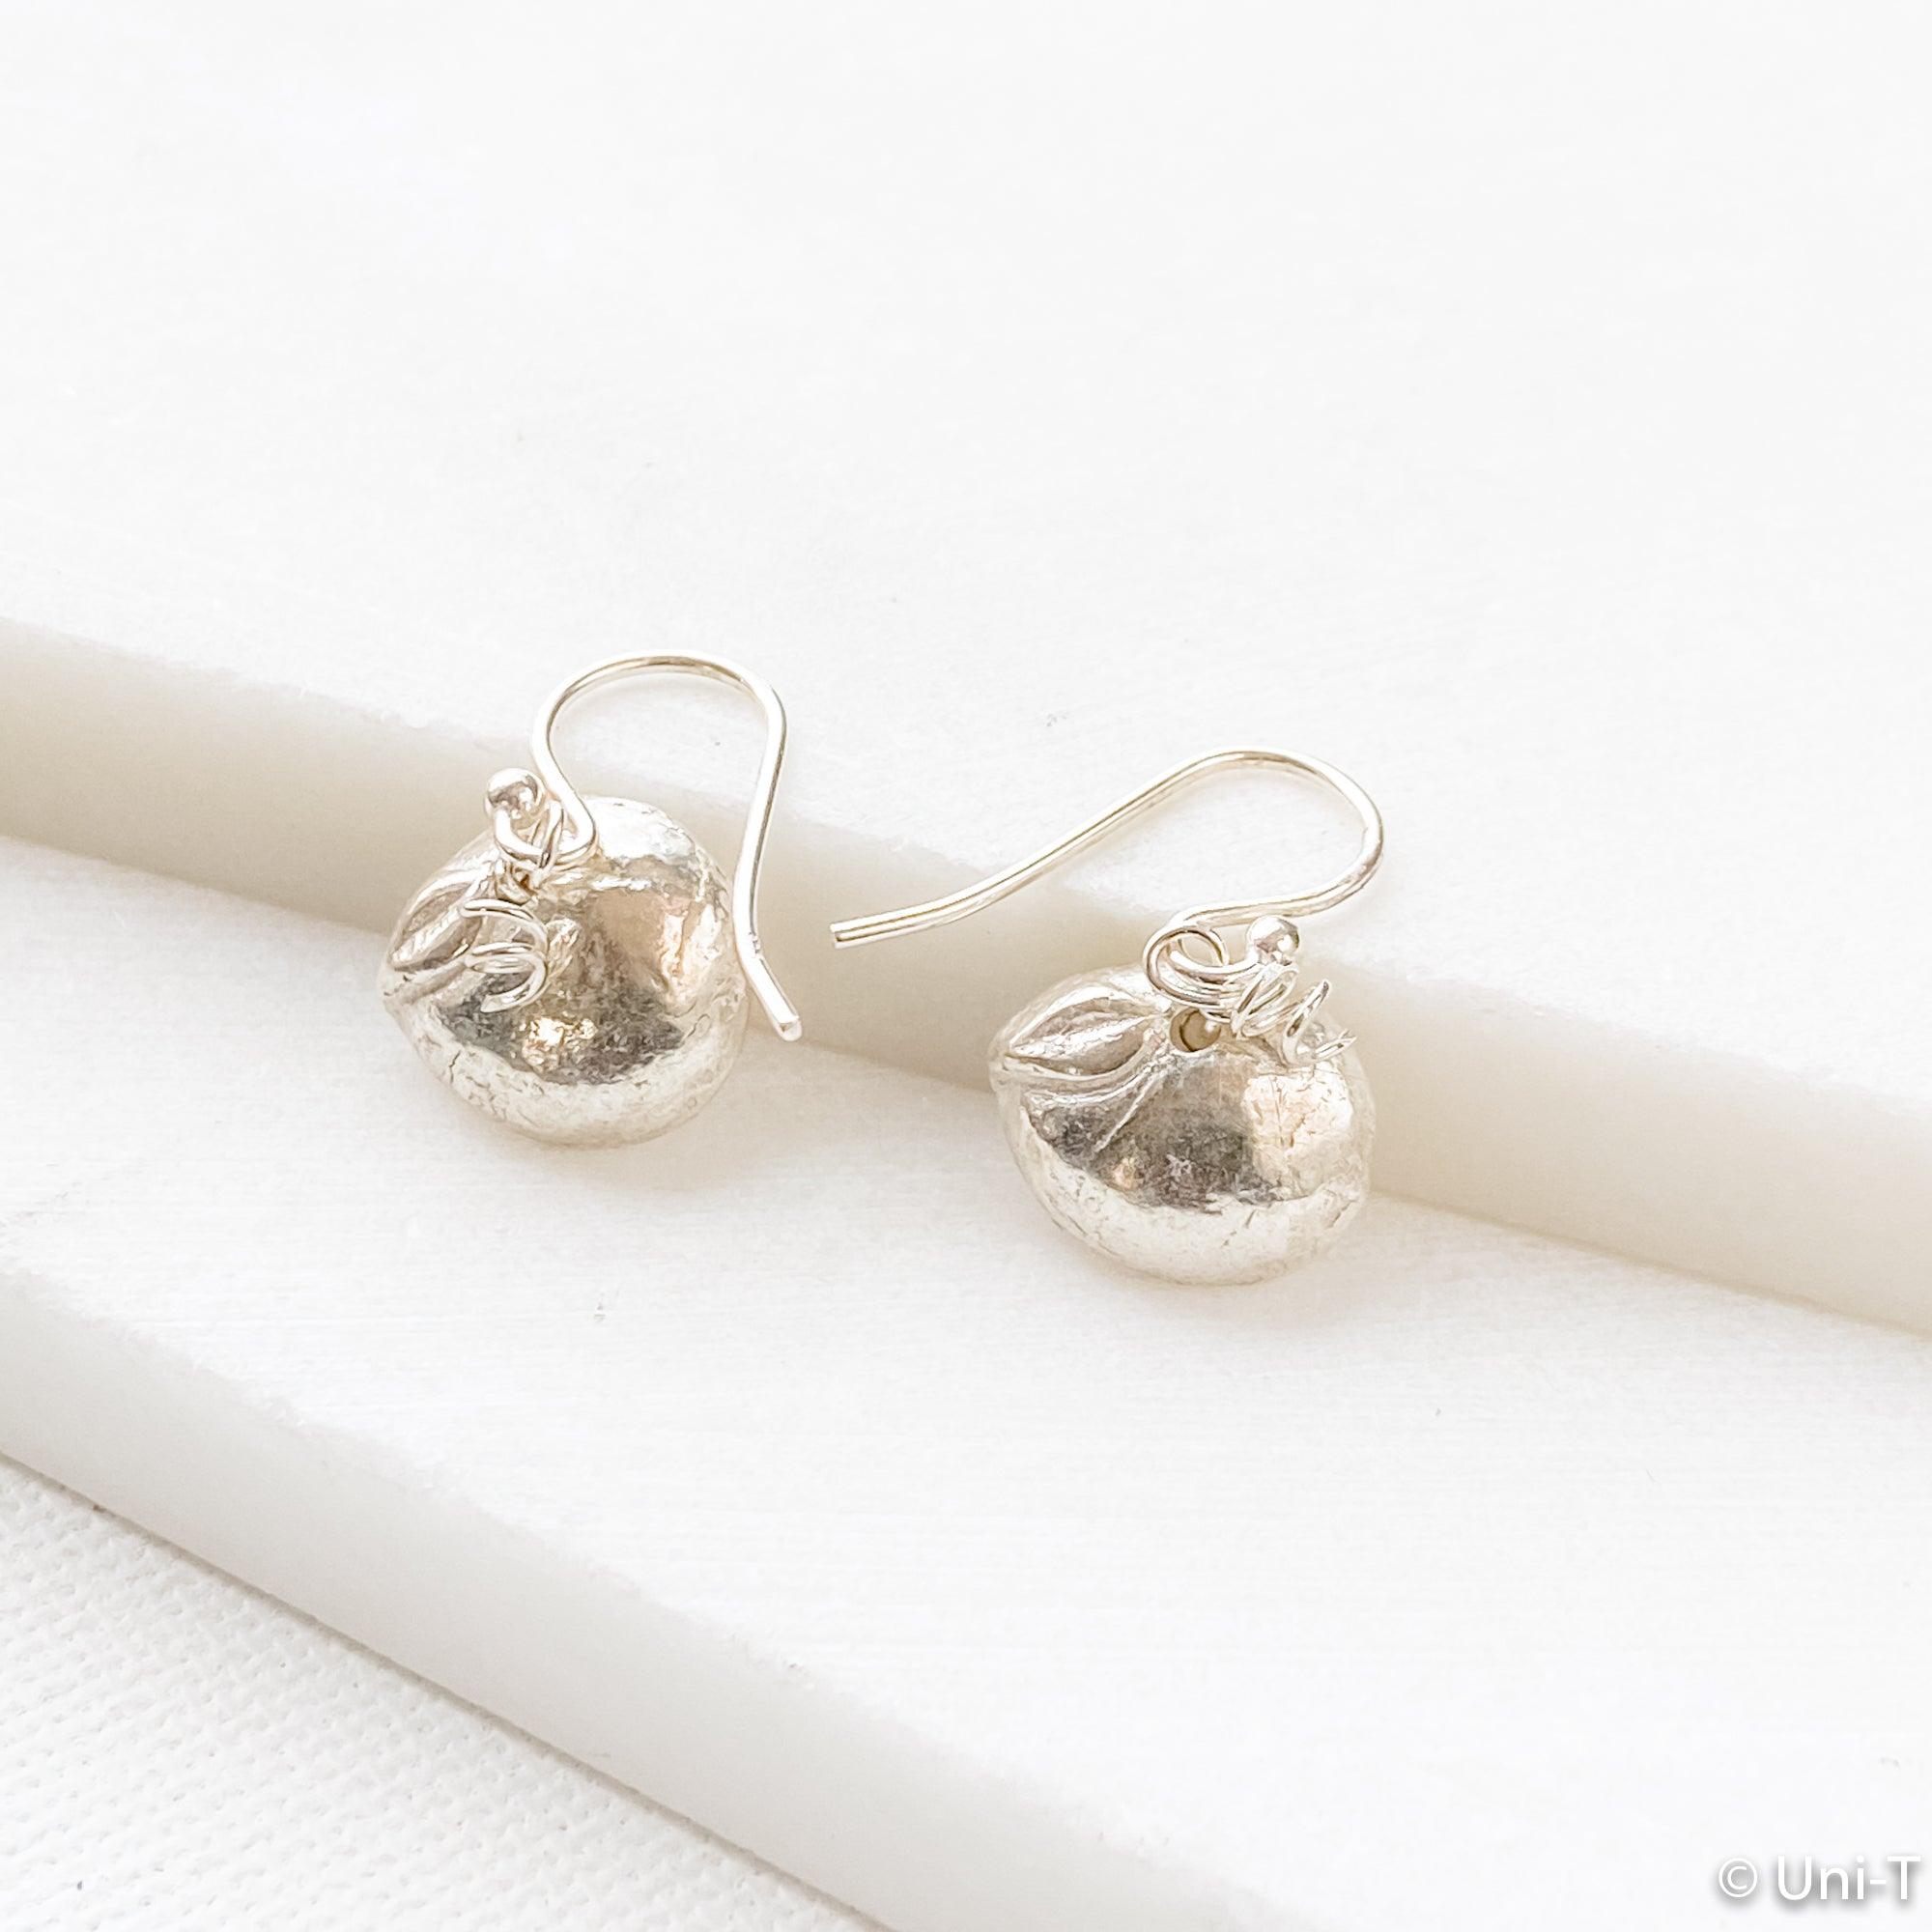 Peach Earrings, Precious Metal Silver Clay Earrings - 99% Pure Silver Uni-T Earrings